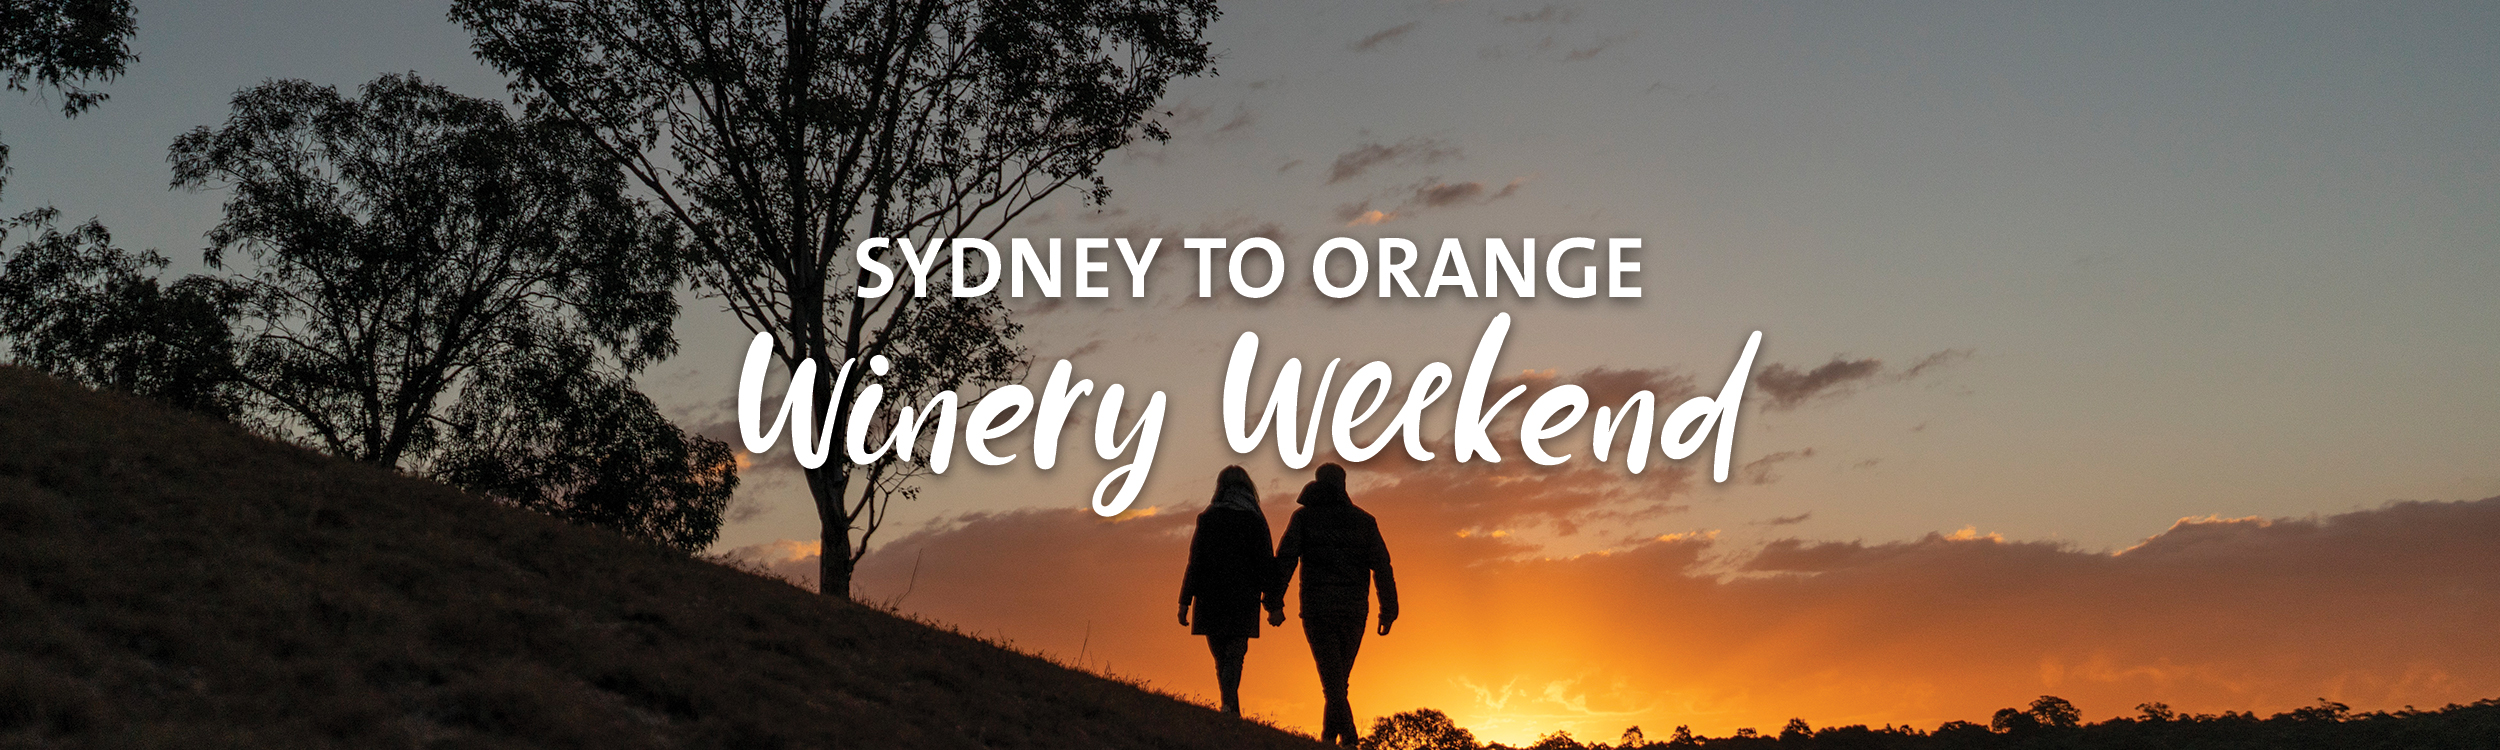 Sydney to Orange Road Trip